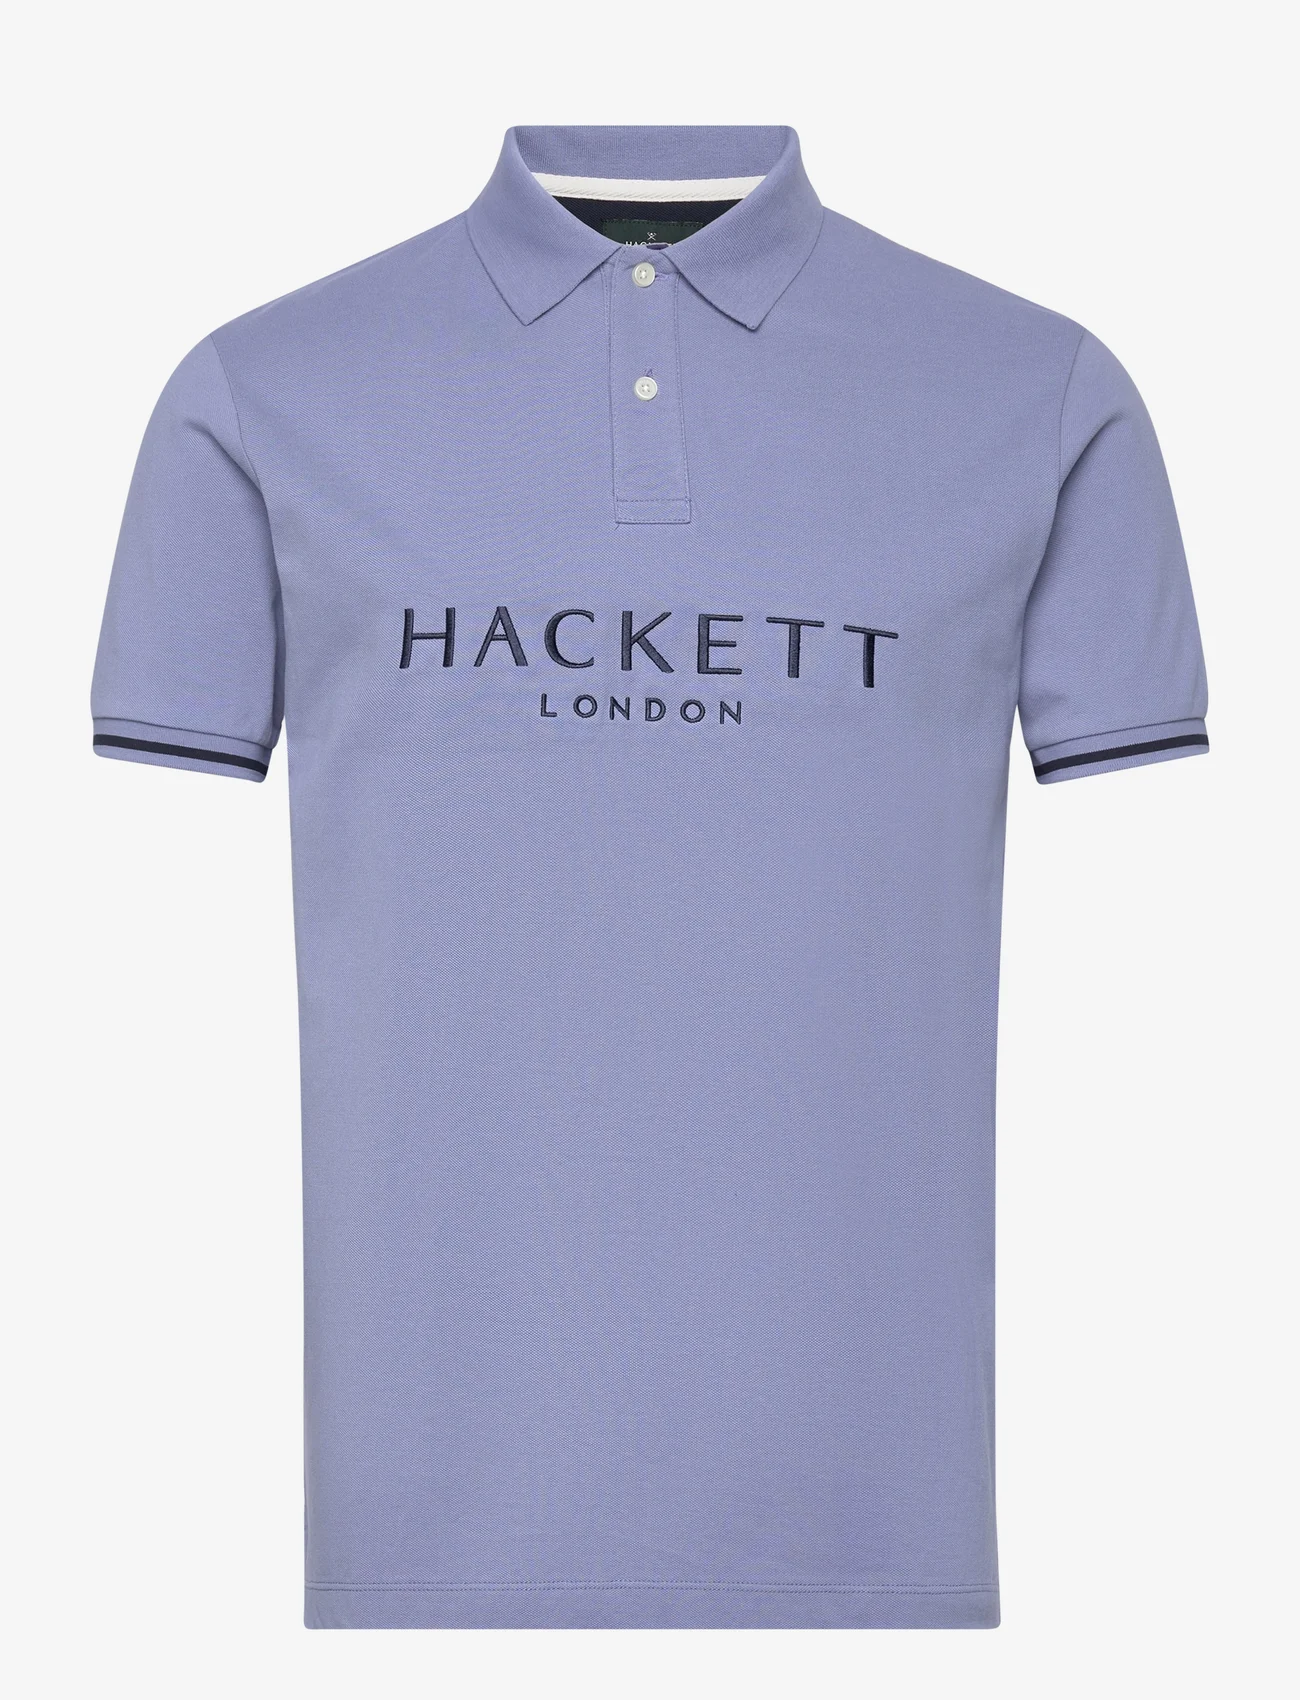 Hackett London - HERITAGE CLASSIC POLO - kurzärmelig - blue - 0